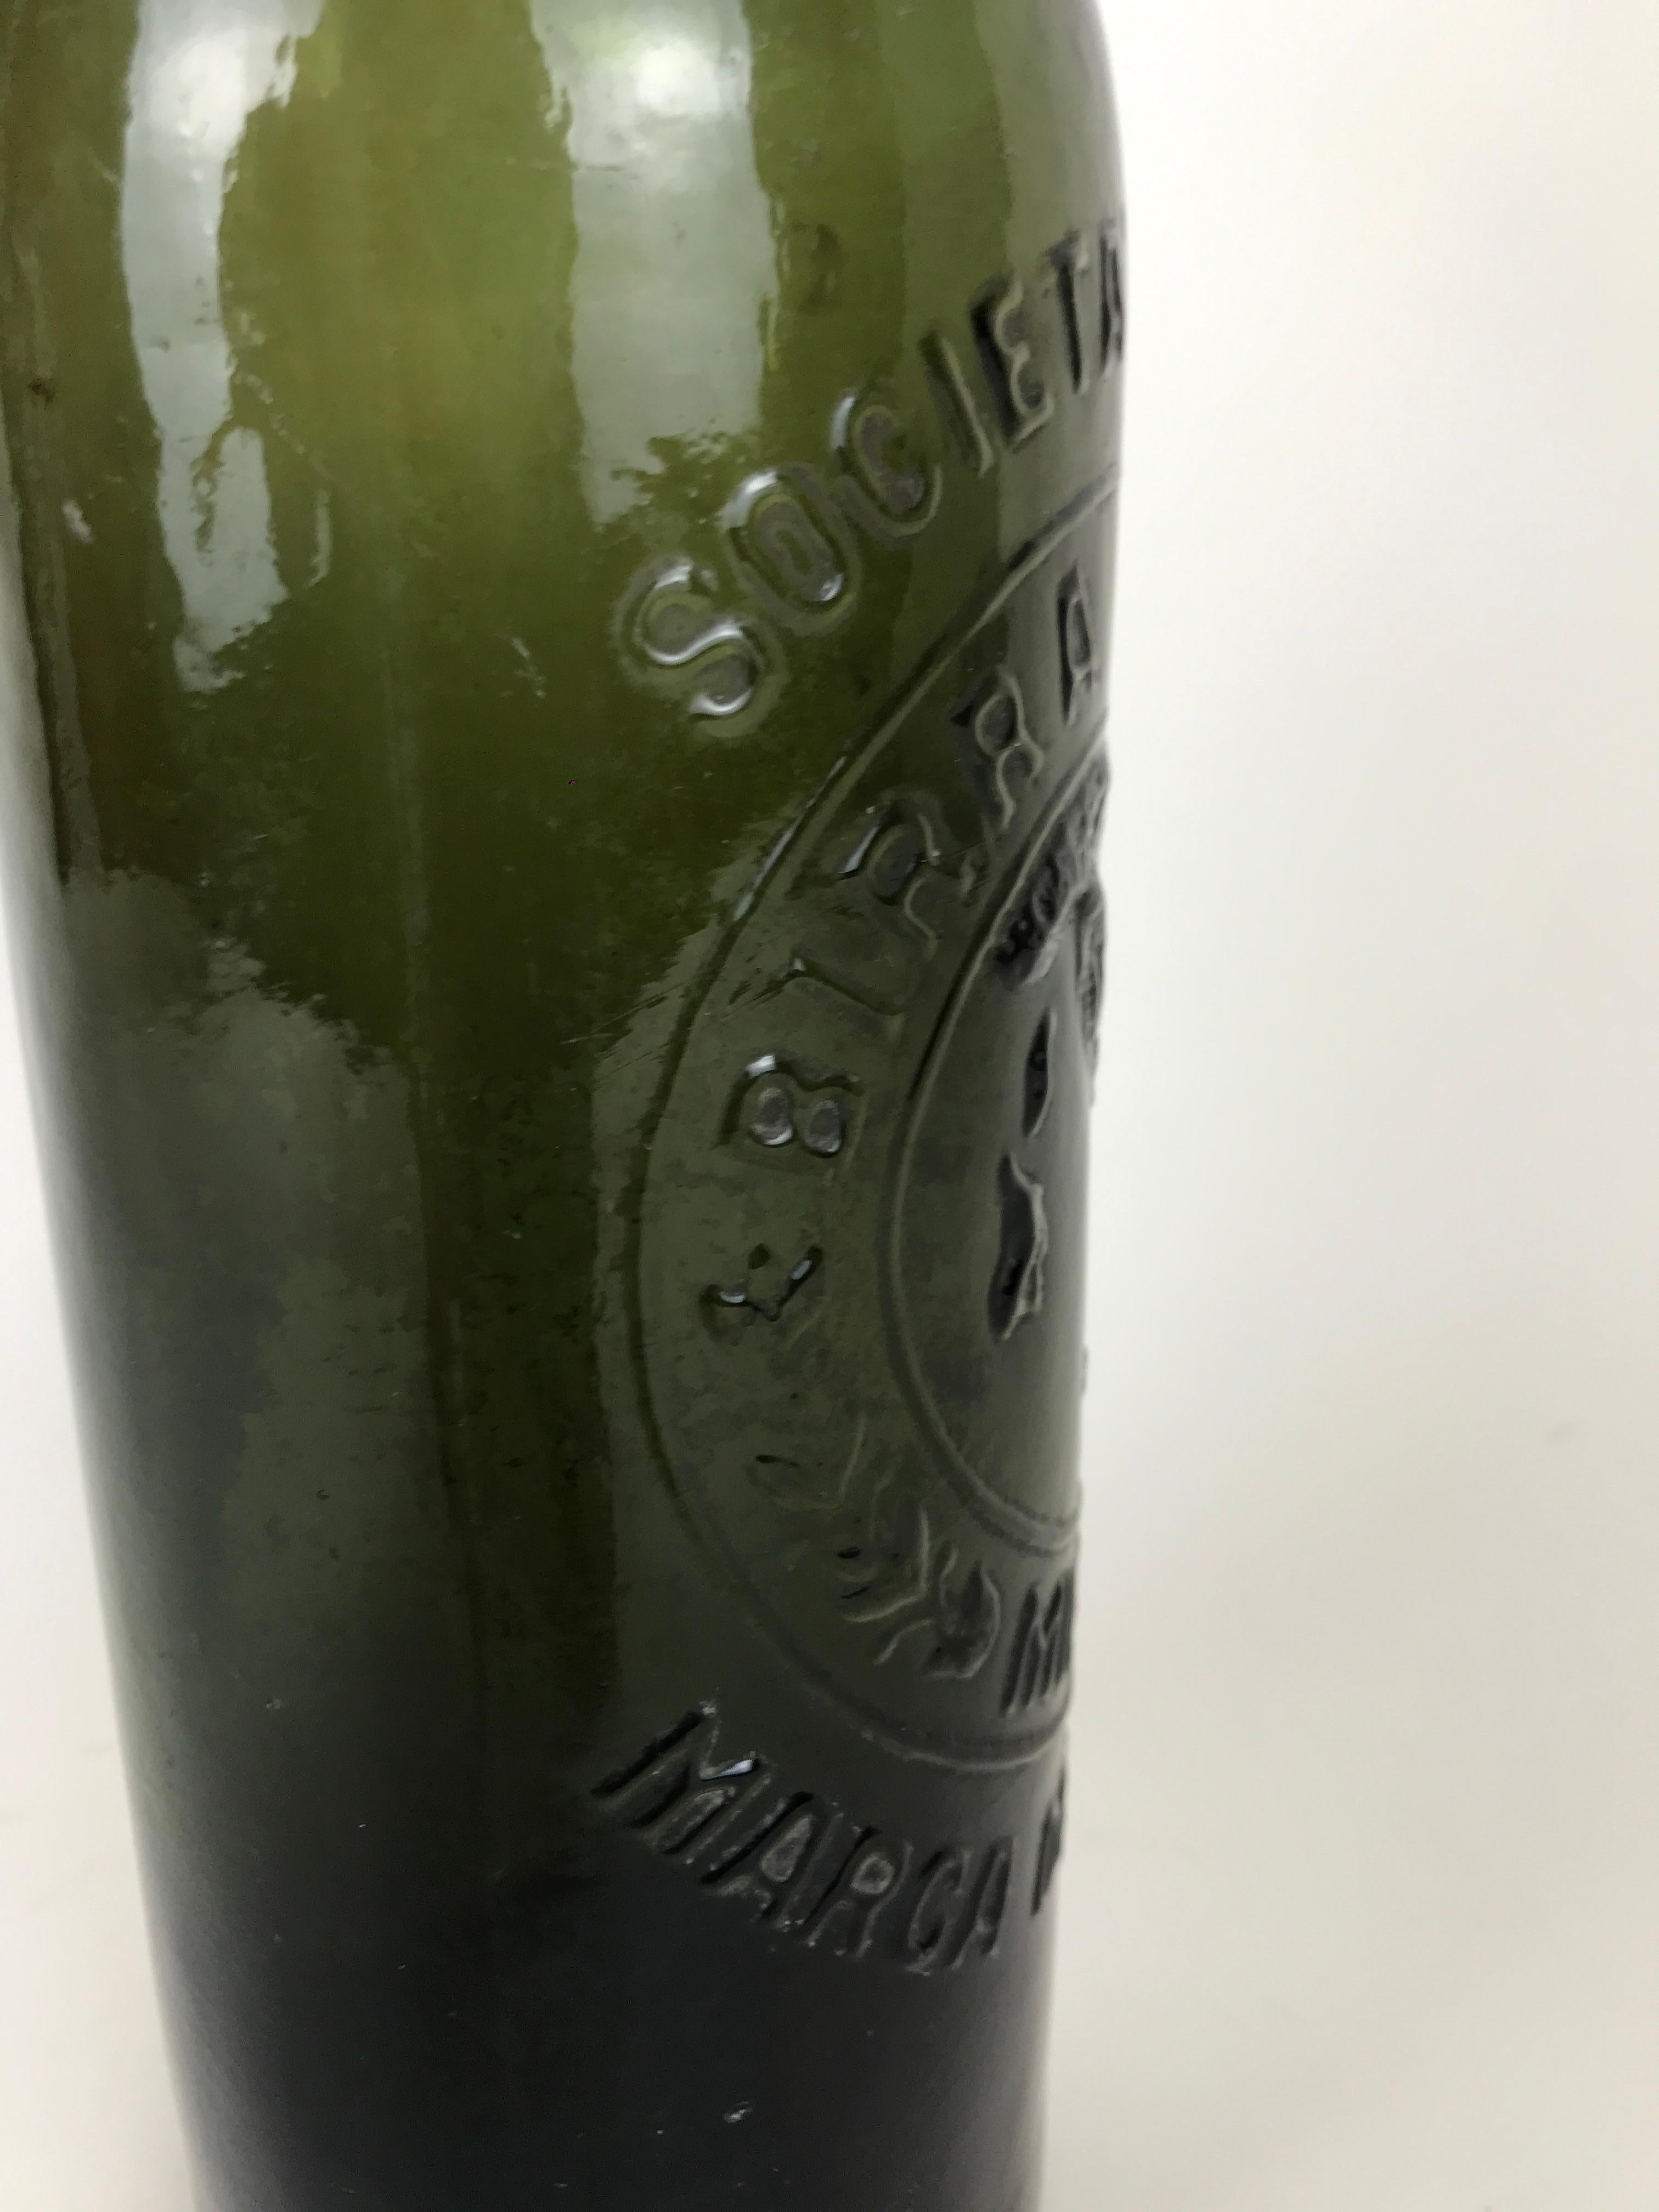 Mid-Century Modern 1950s Vintage Italian Birra Italia Beer Green Glass Bottle with Ceramic Stopper For Sale